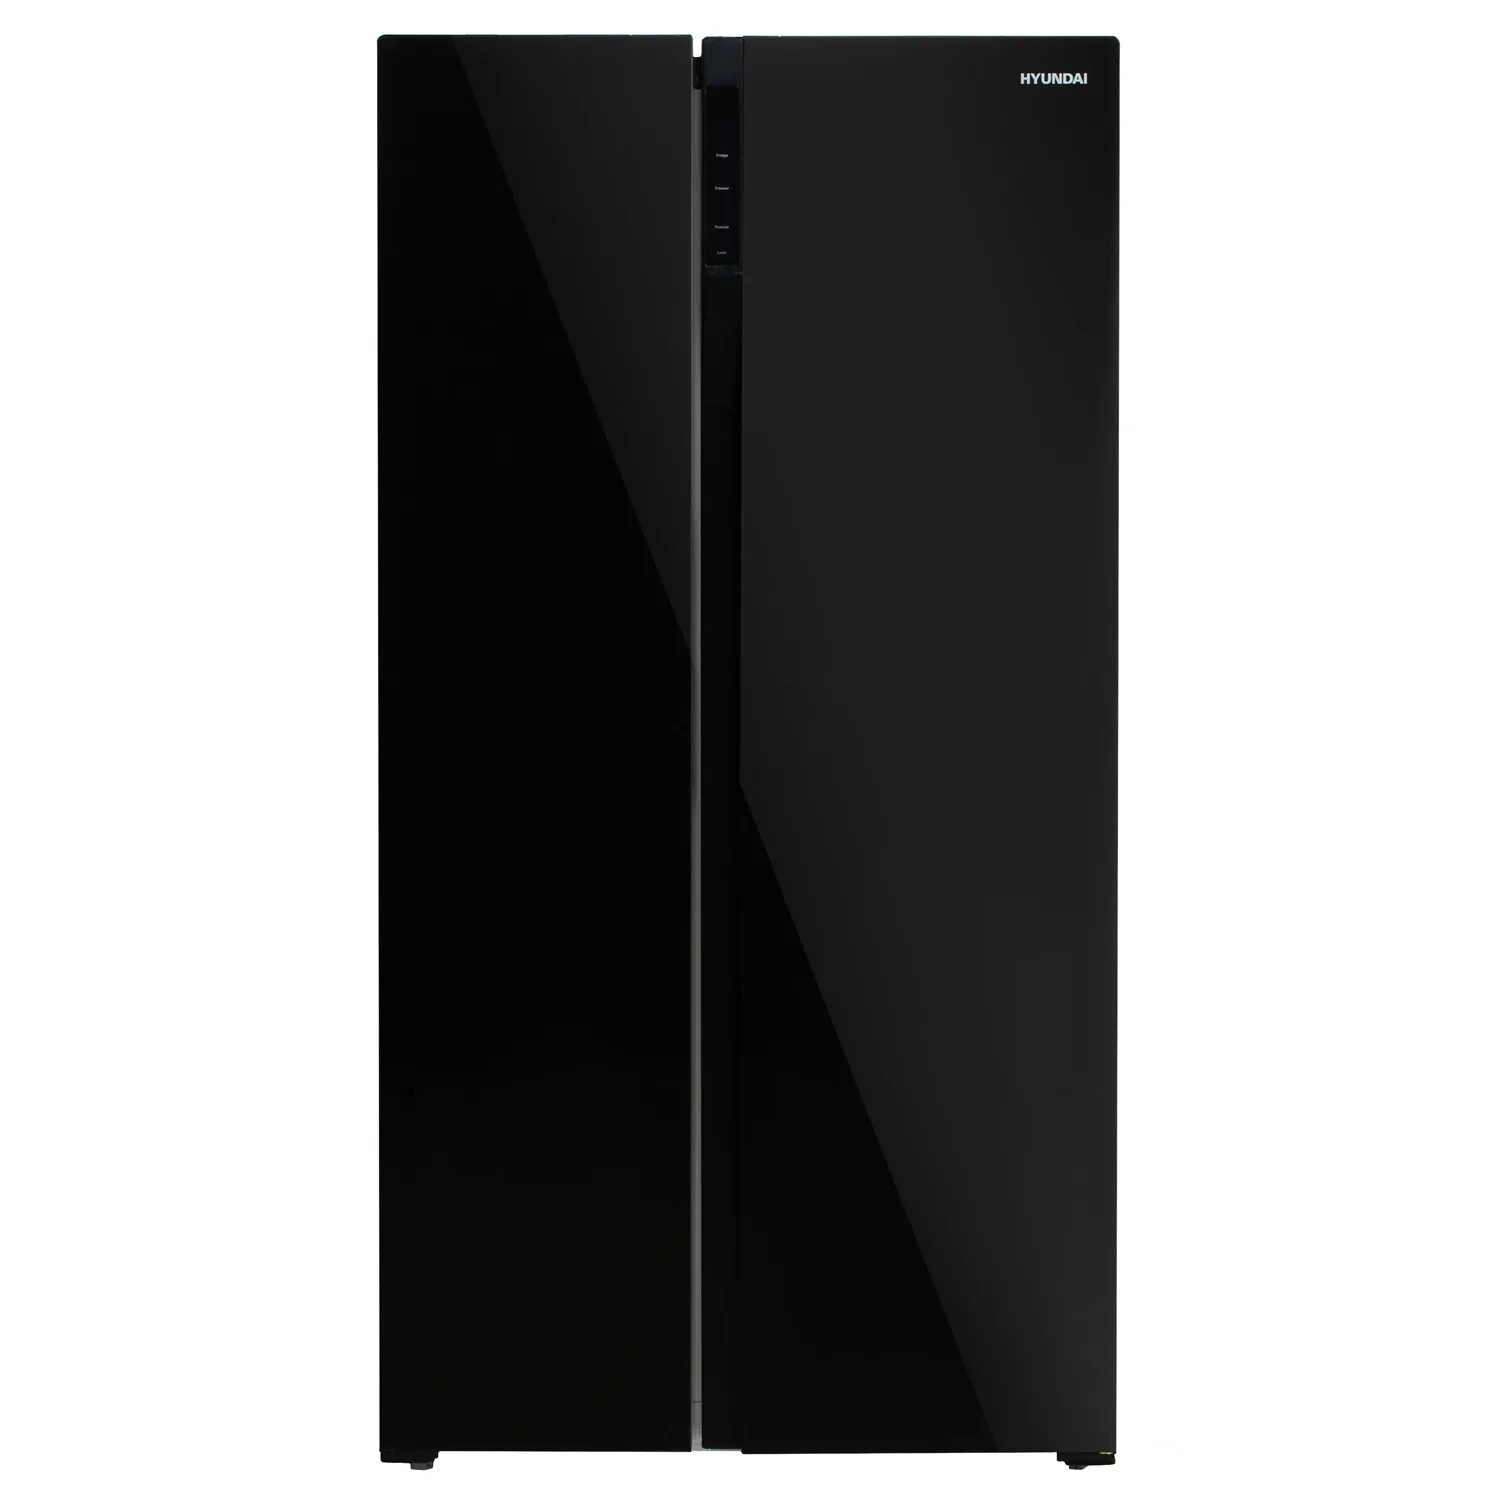 Холодильник Samsung rs62r50312c/WT. Samsung rs62r50312c WT черный. Холодильник Samsung rs62r5031b4/WT, черный. Холодильник Hyundai cs5003f черное стекло. Холодильник side by side hyundai